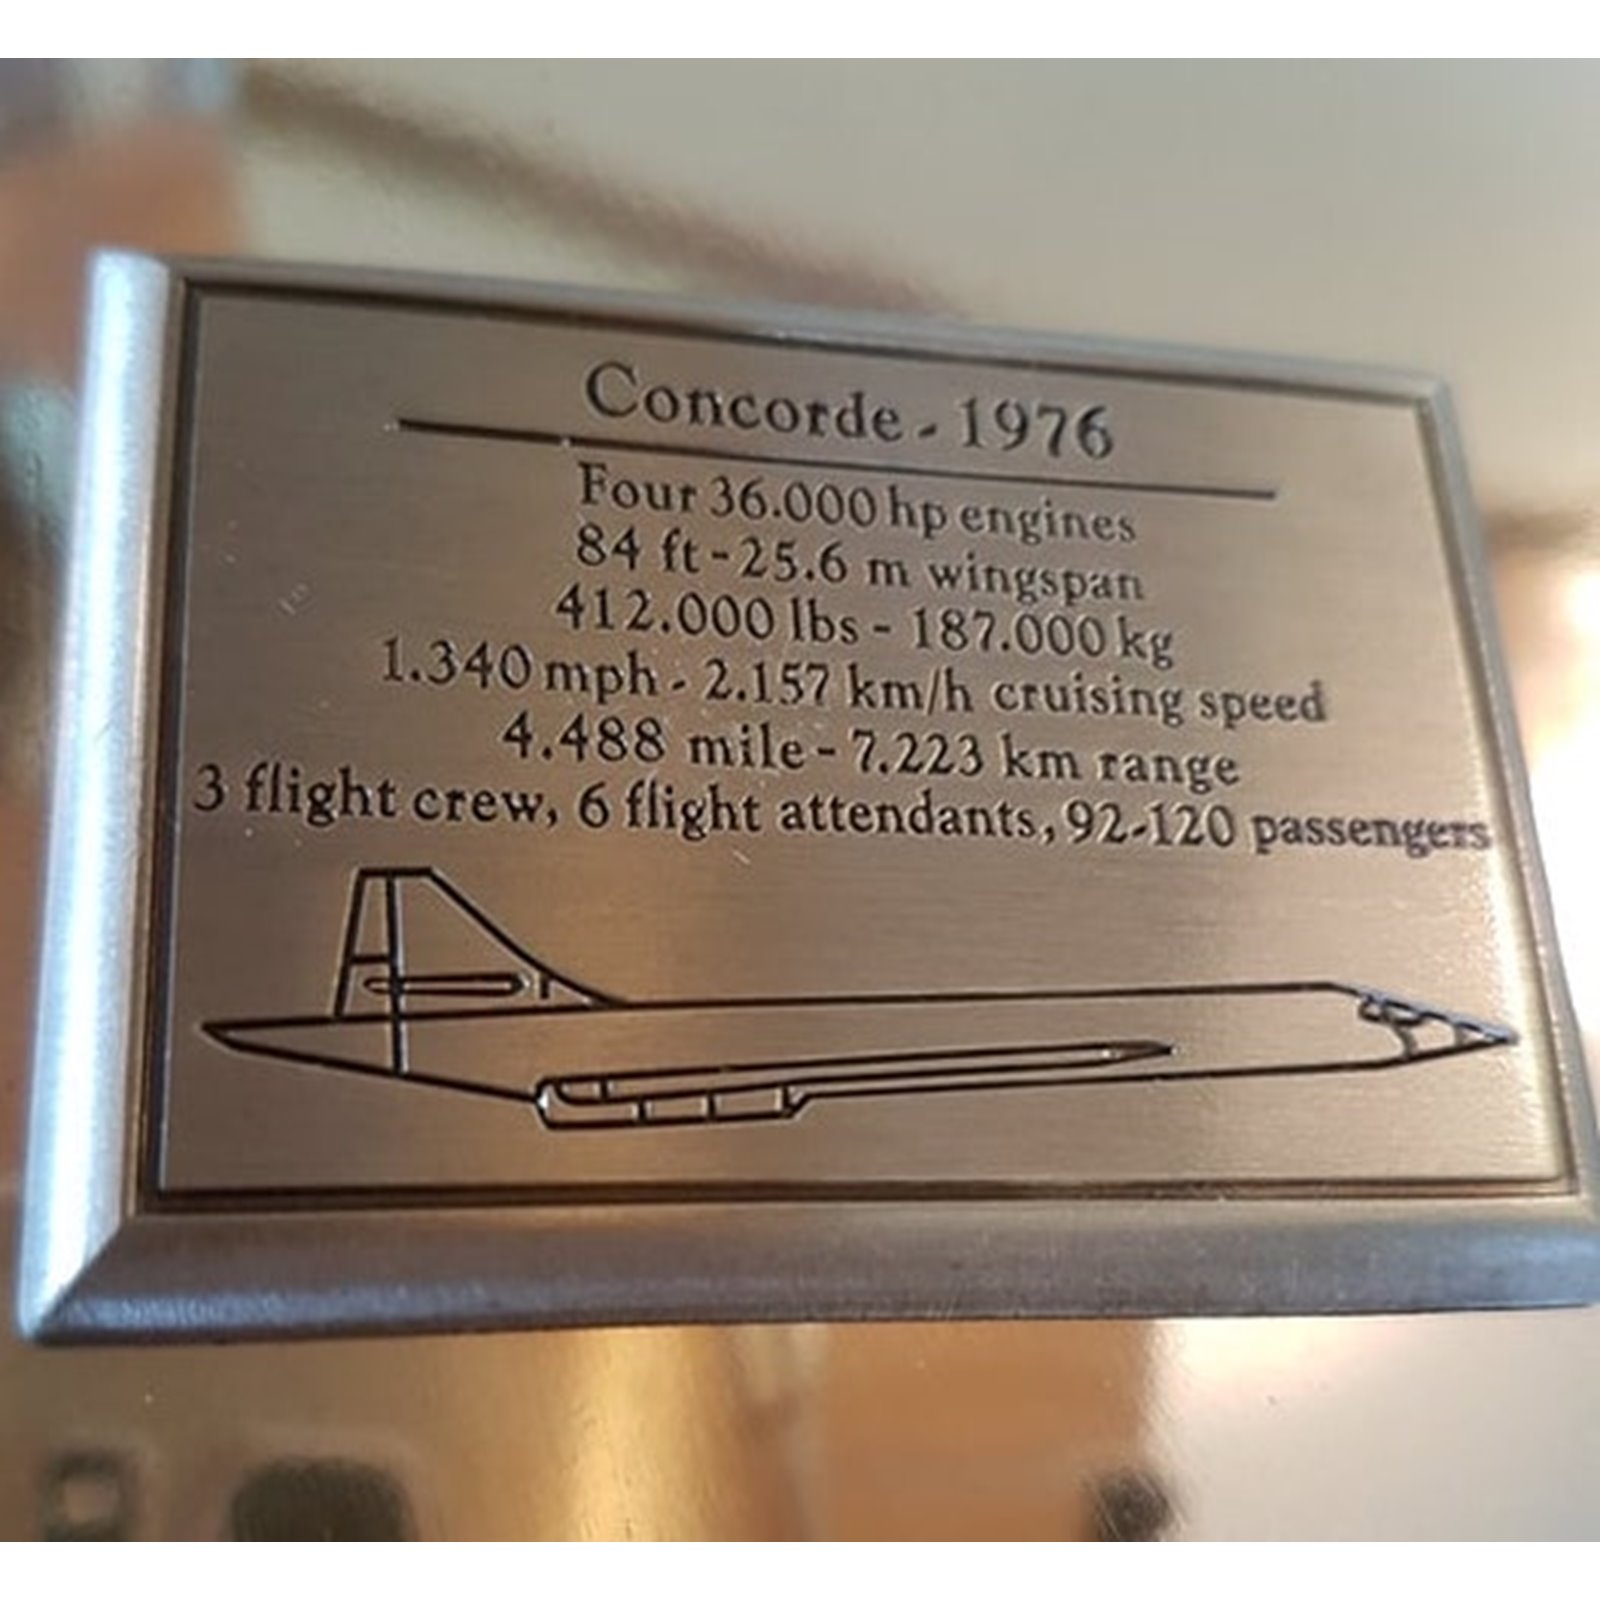 Authentic Models Concorde 1976 Model Image